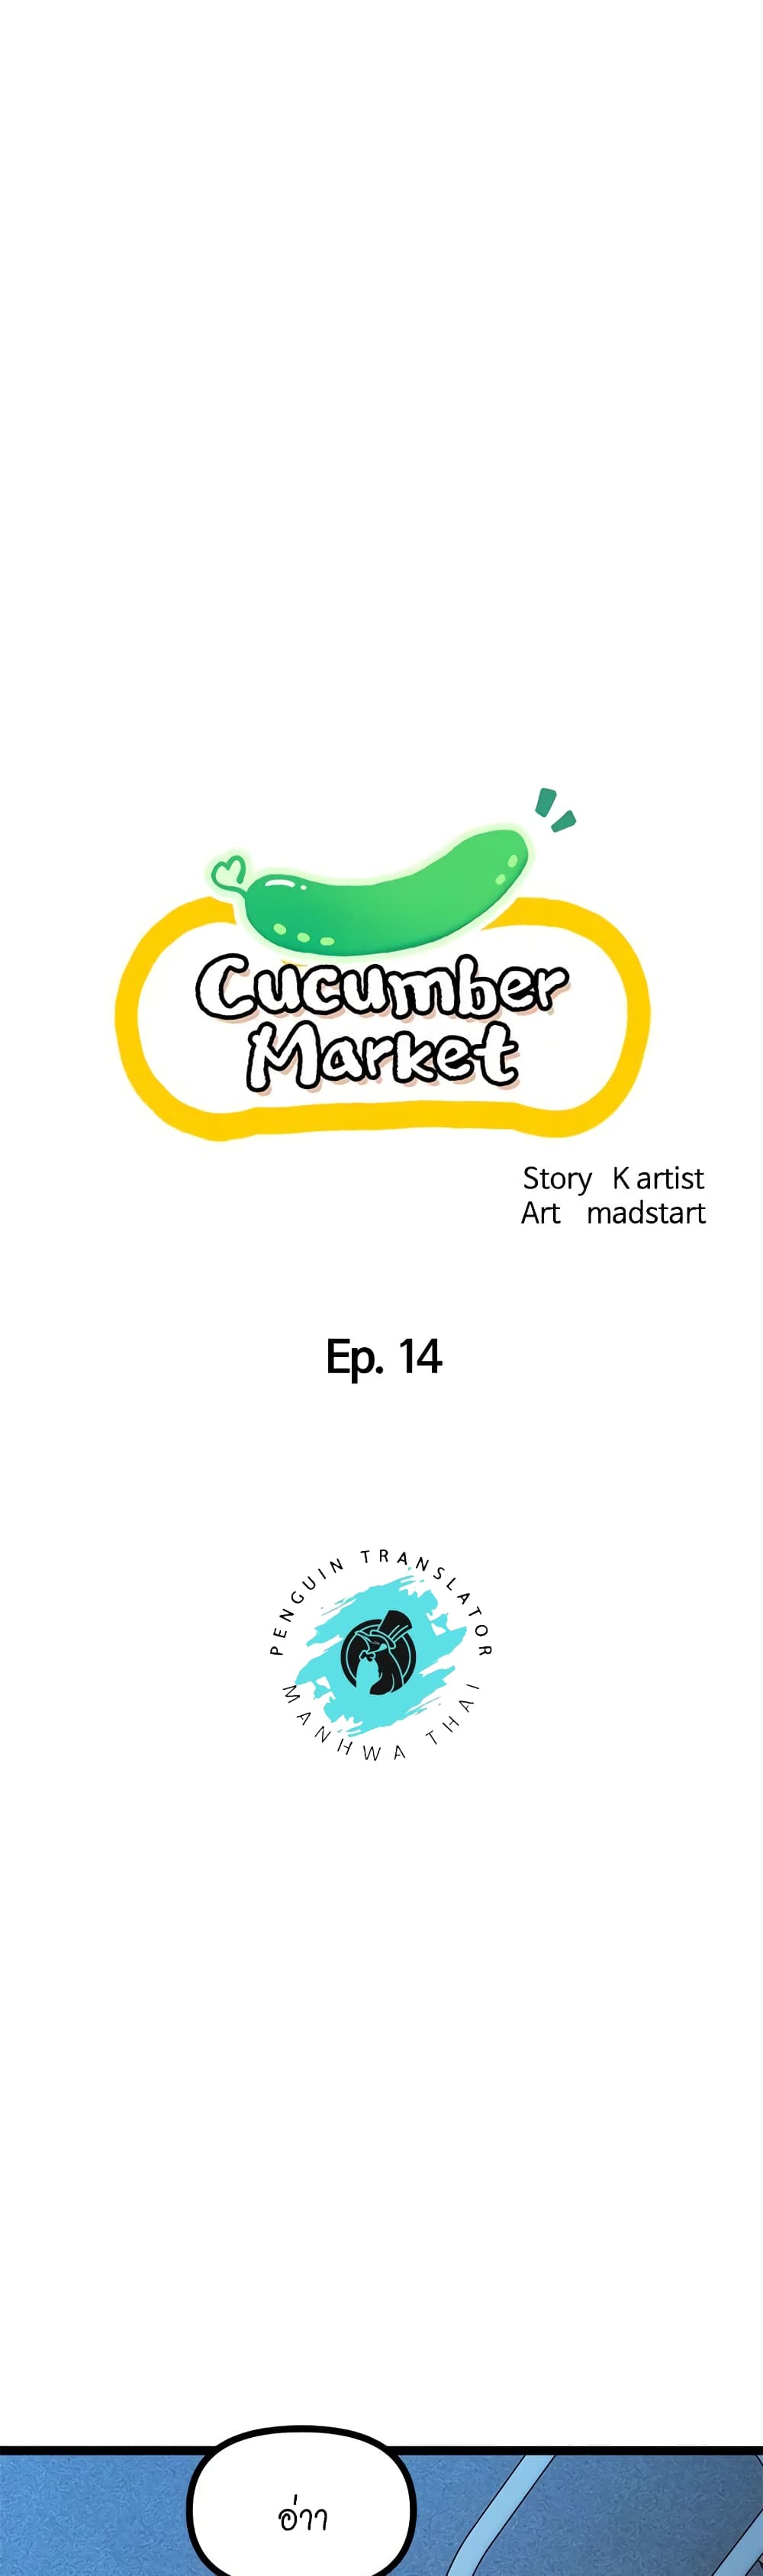 Cucumber Market 14 (1)